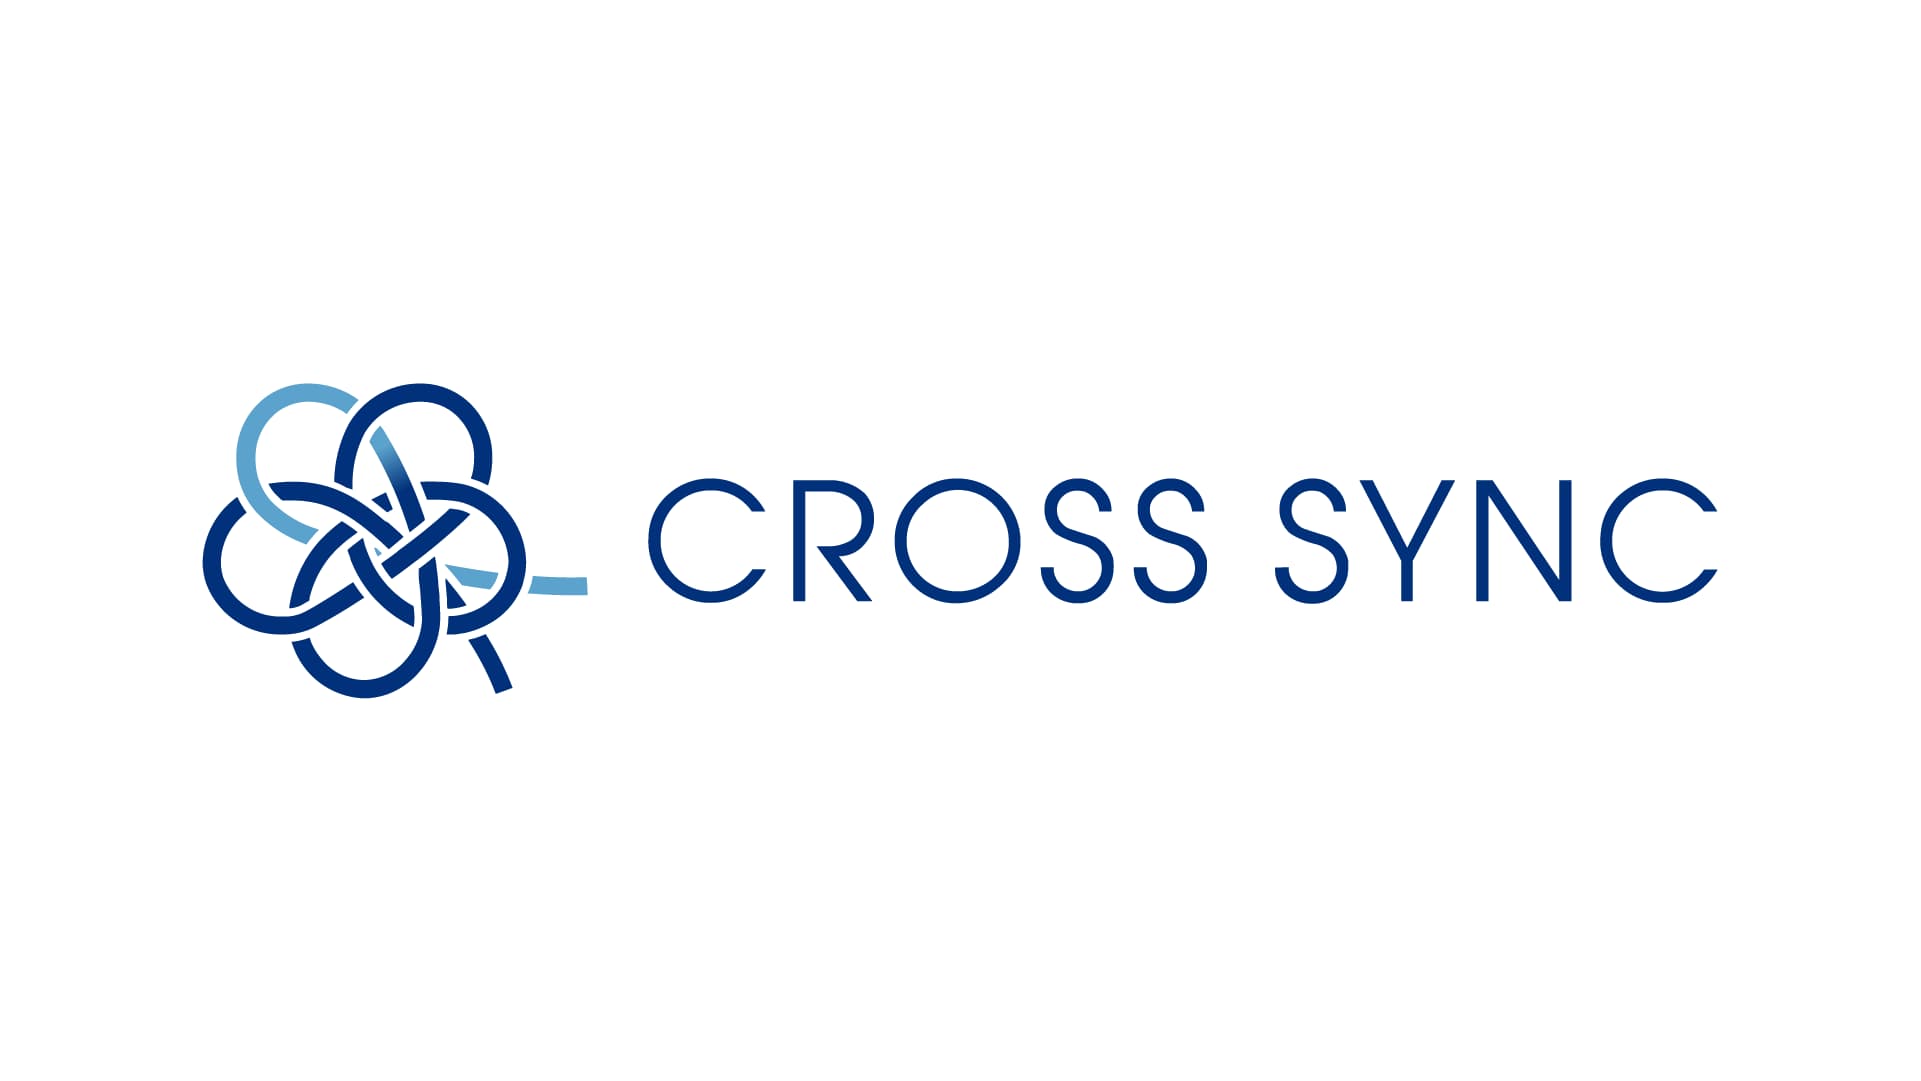 CROSS SYNC、医療安全と質の改善支援のため、総額5.1億円の資金調達を実施